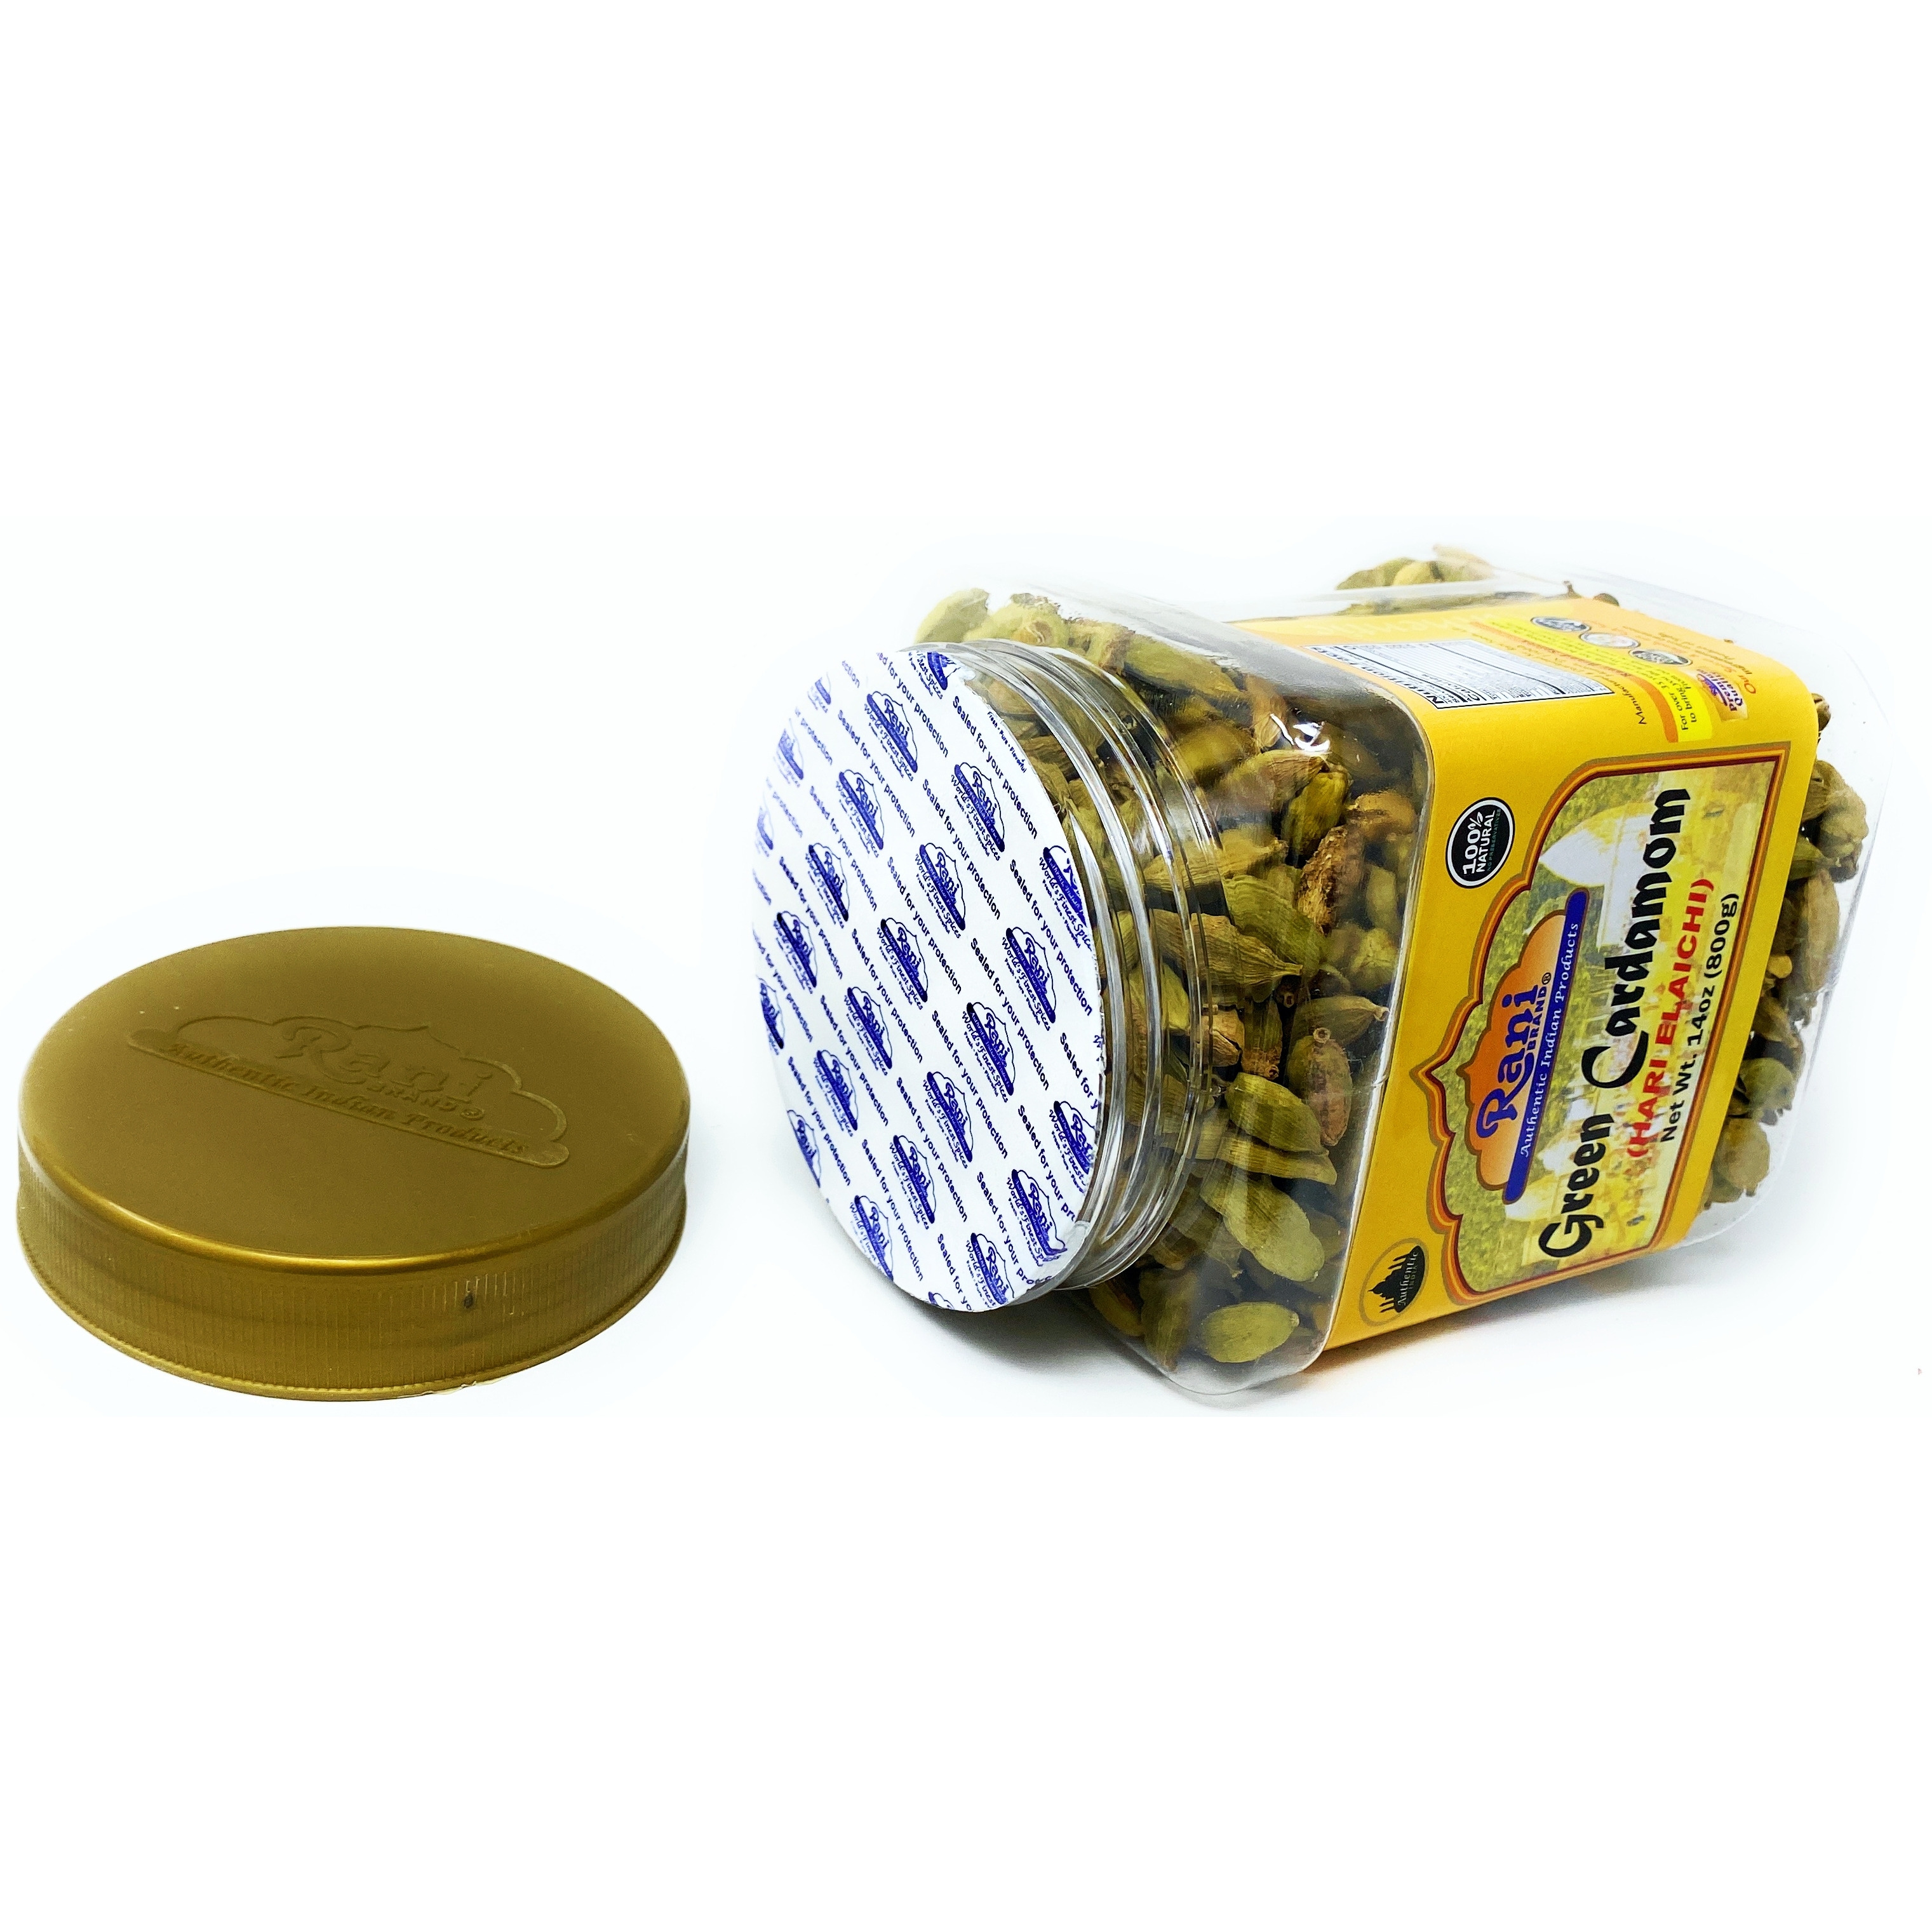 Rani Green Cardamom Pods Spice (Hari Elachi) 400g (14oz) PET Jar ~ Natural | Vegan | Gluten Friendly | NON-GMO